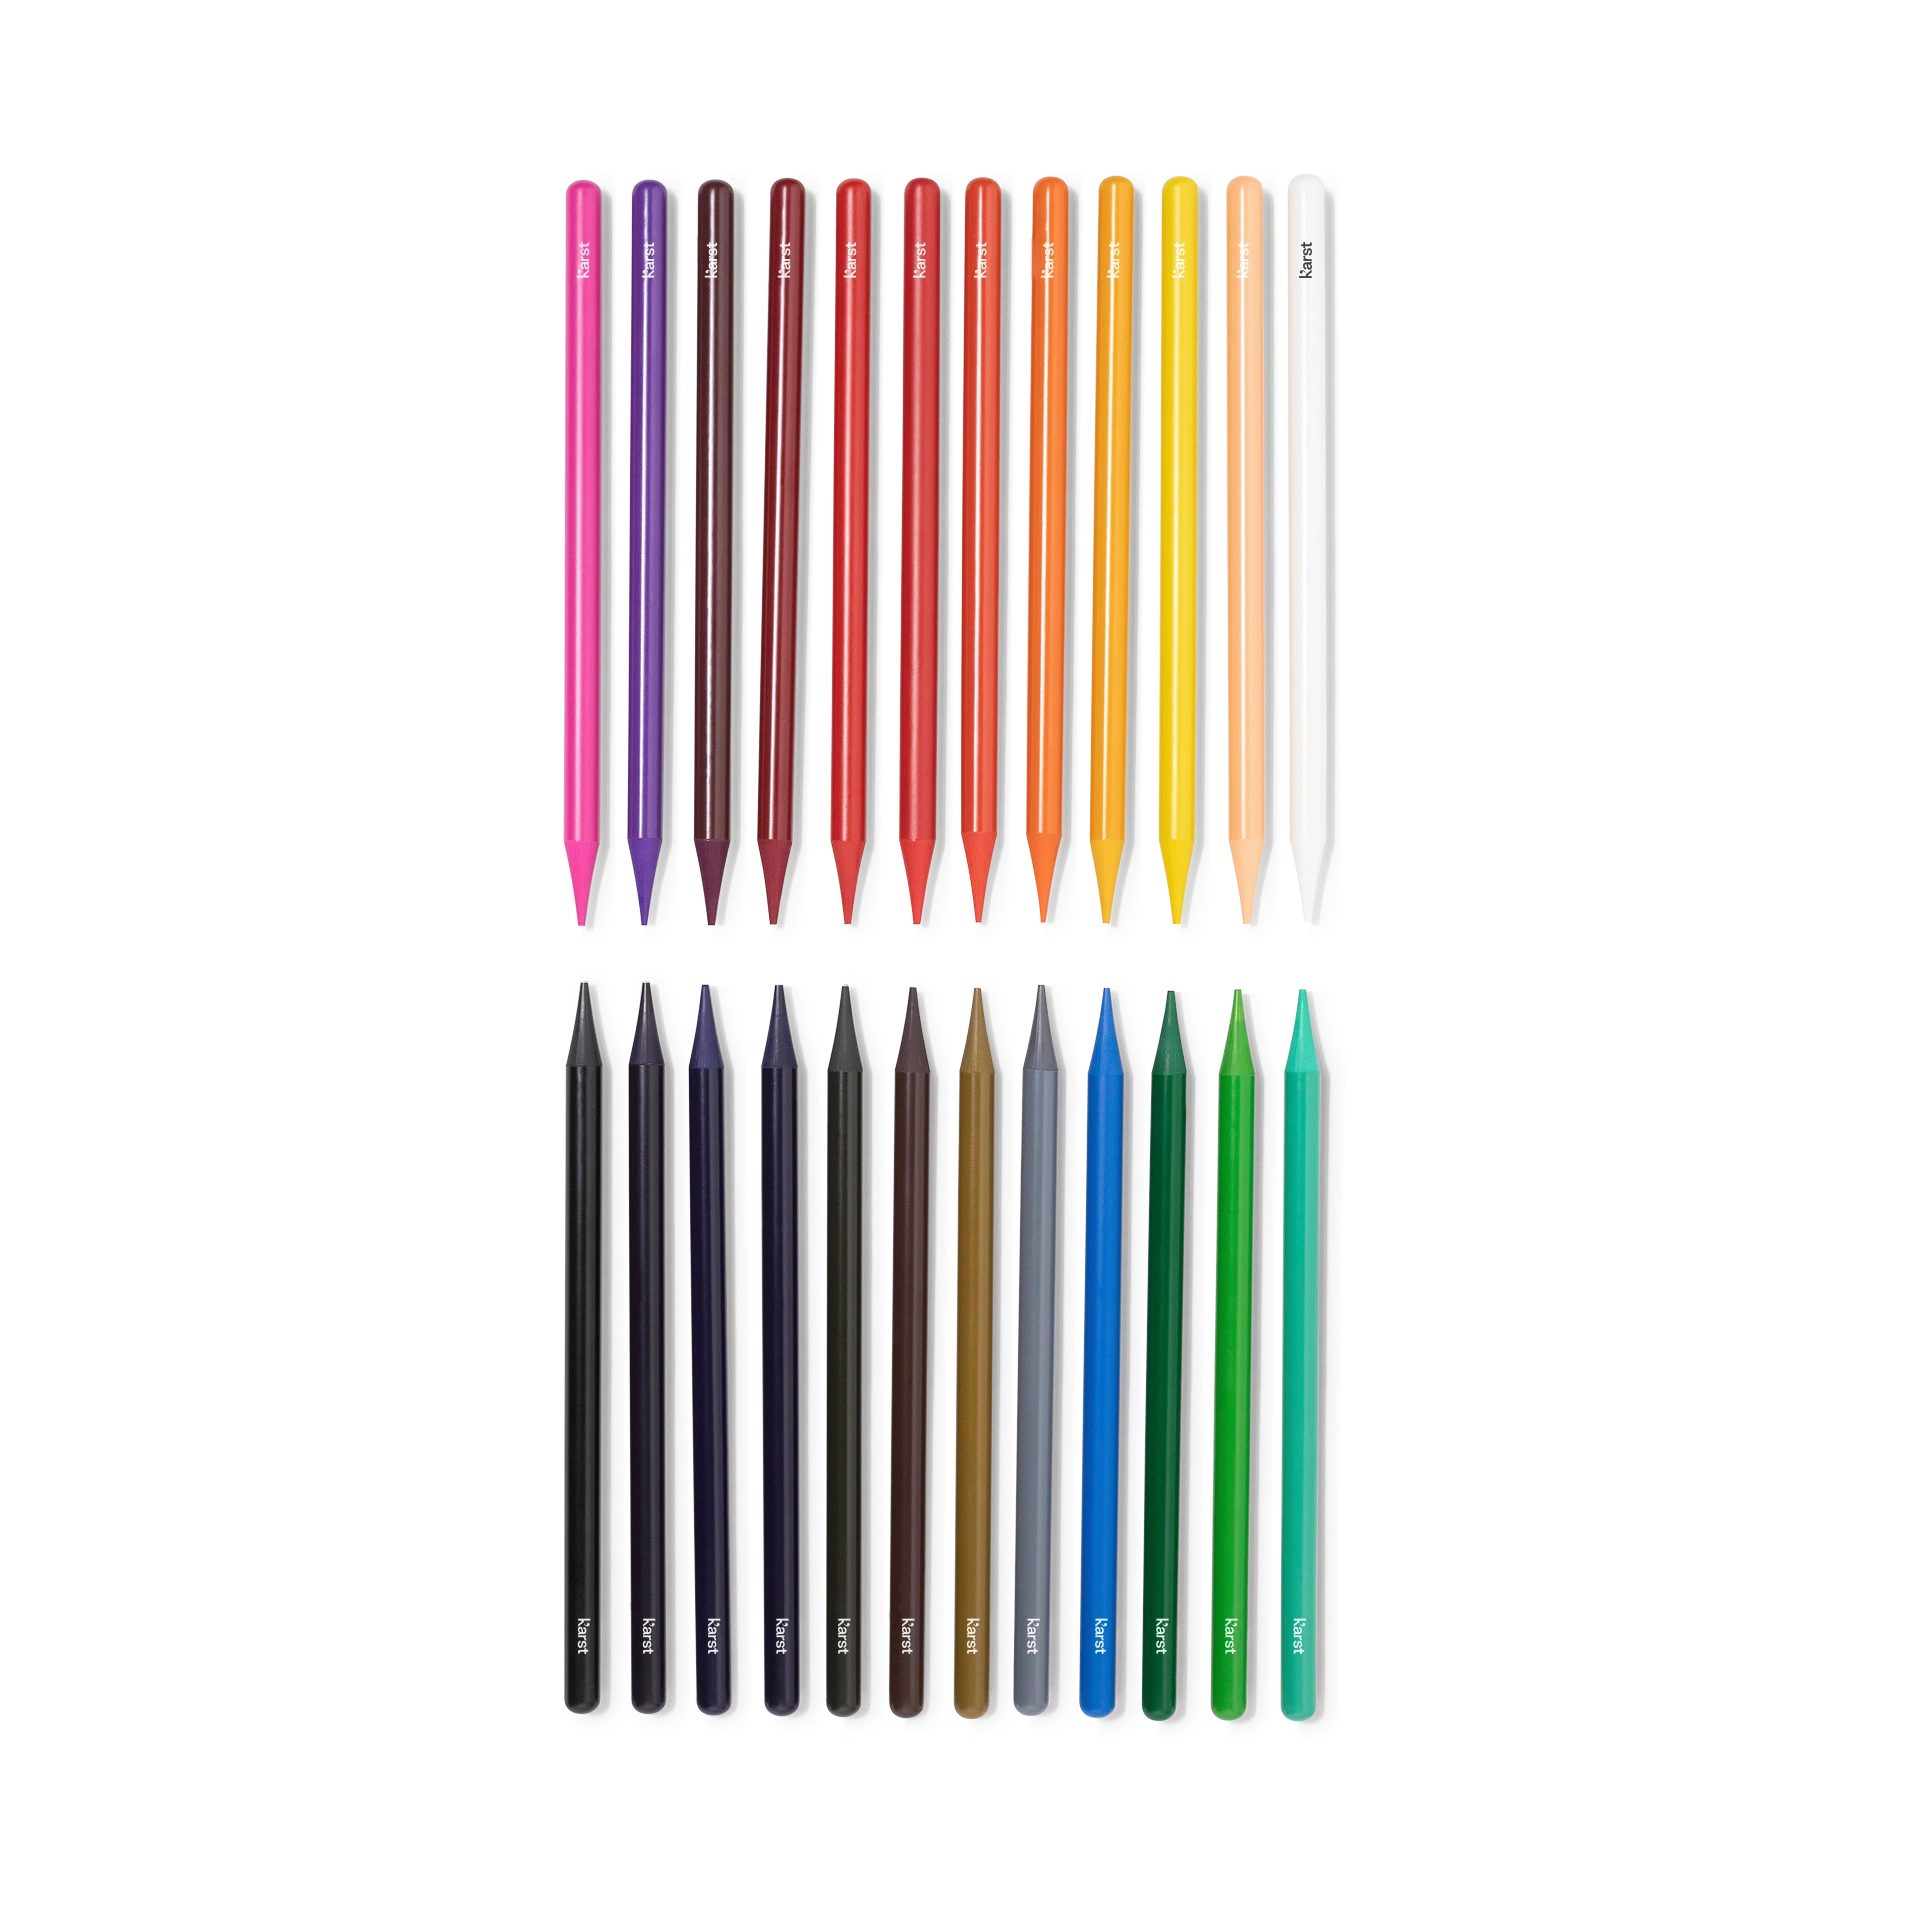 Karst® 5-pack 2B woodless graphite pencils - Identity Merchandise